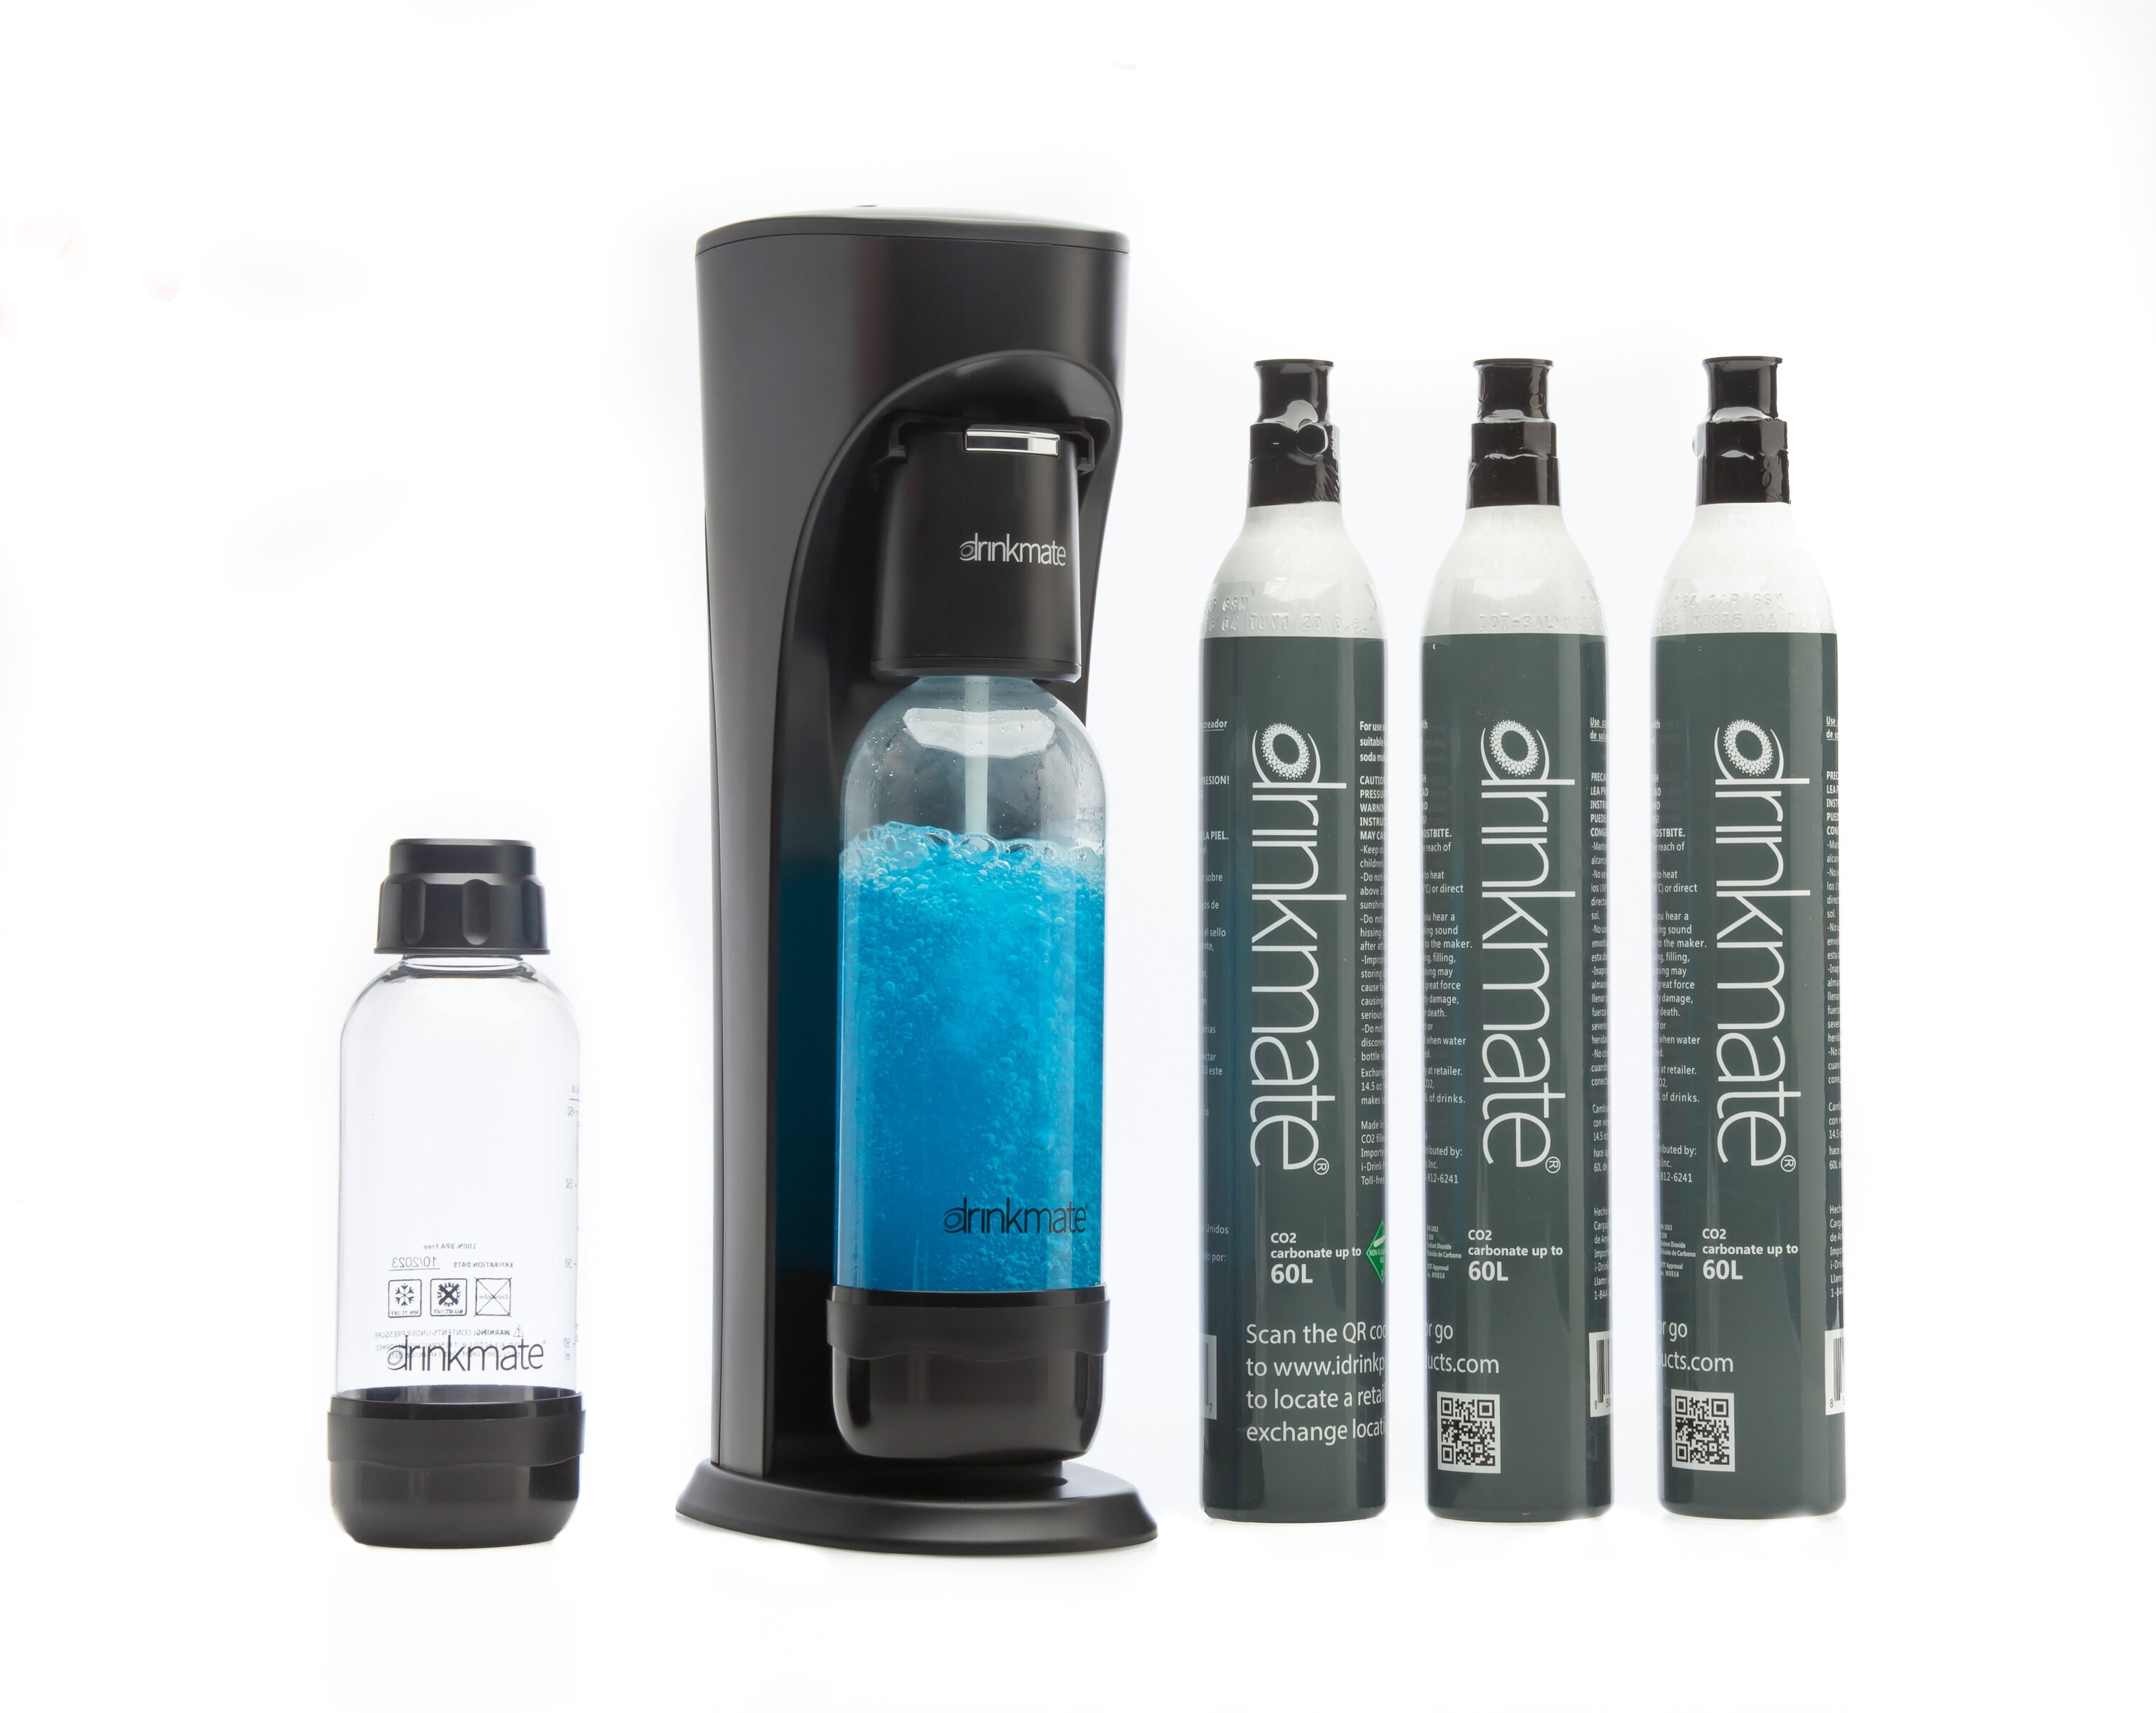 SodaStream Jet Sparkling Water Maker w/ 60L CO2 Cylinder & Reusable,  BPA-Free Bottle, Metallic Black